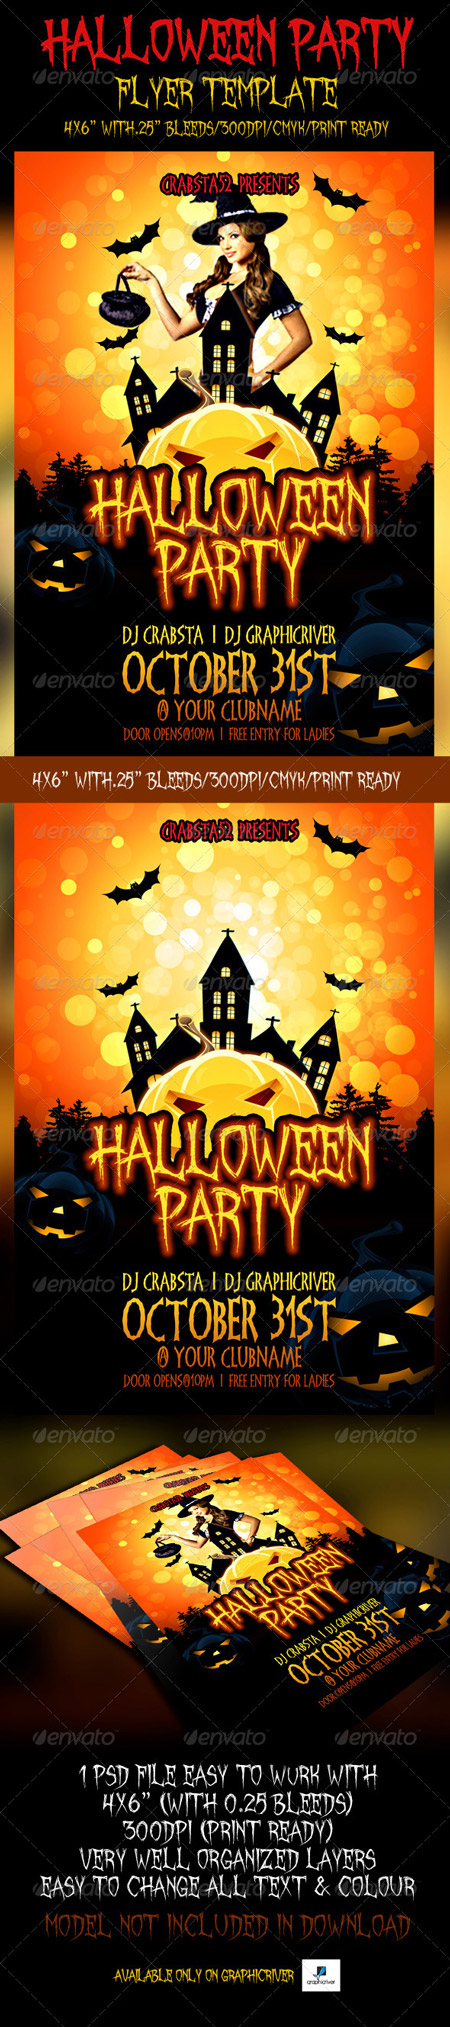 PSD - Halloween Party Flyer Template